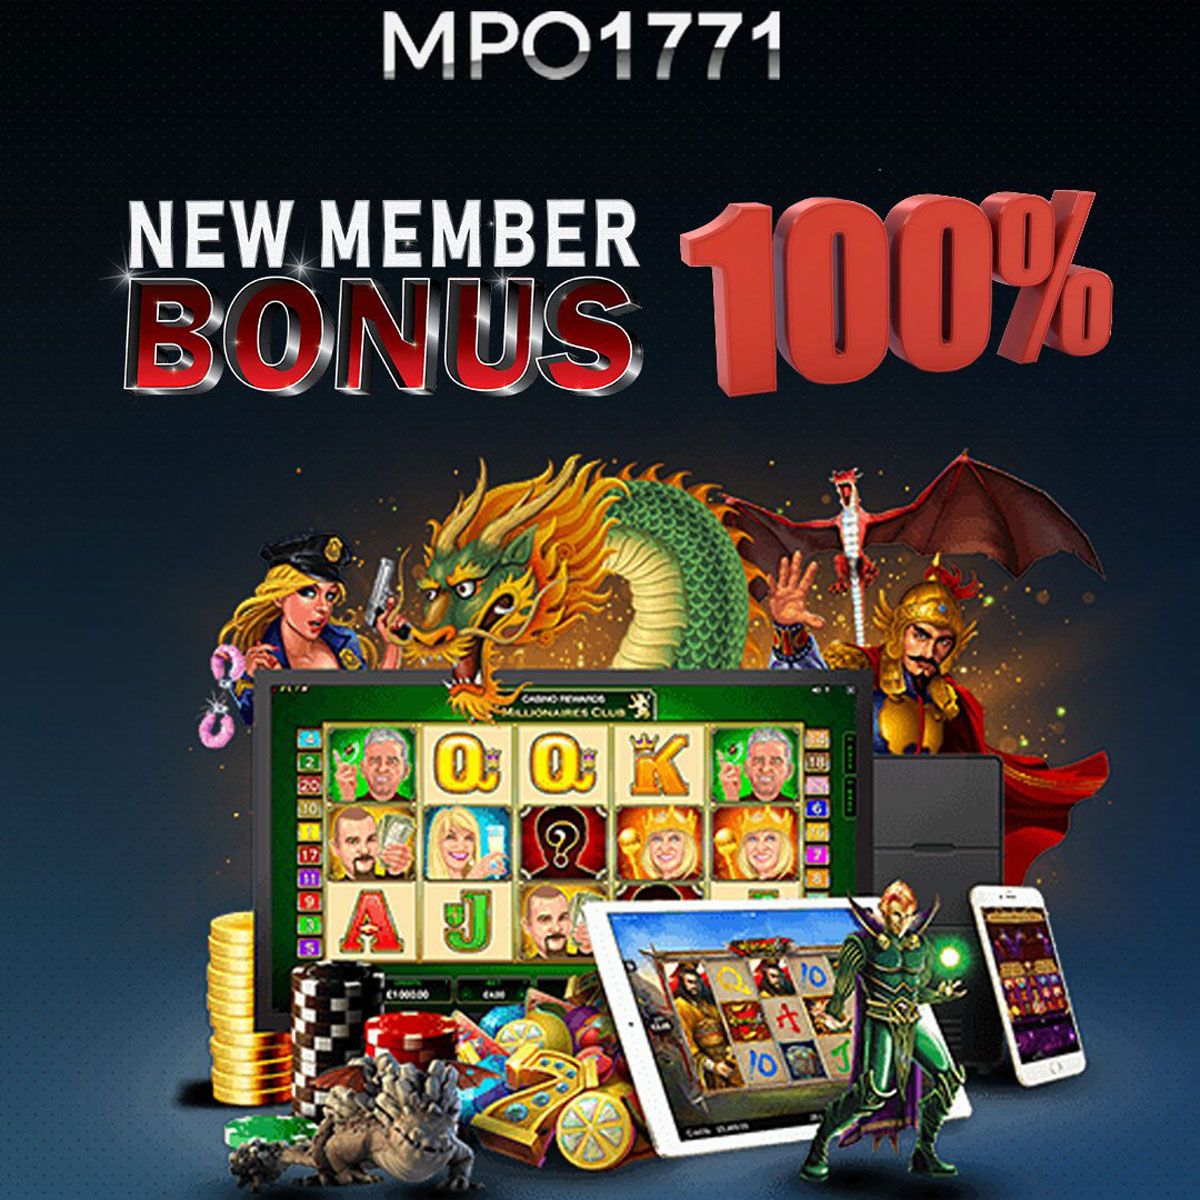 MPO1771 bonus new member 100% didepan